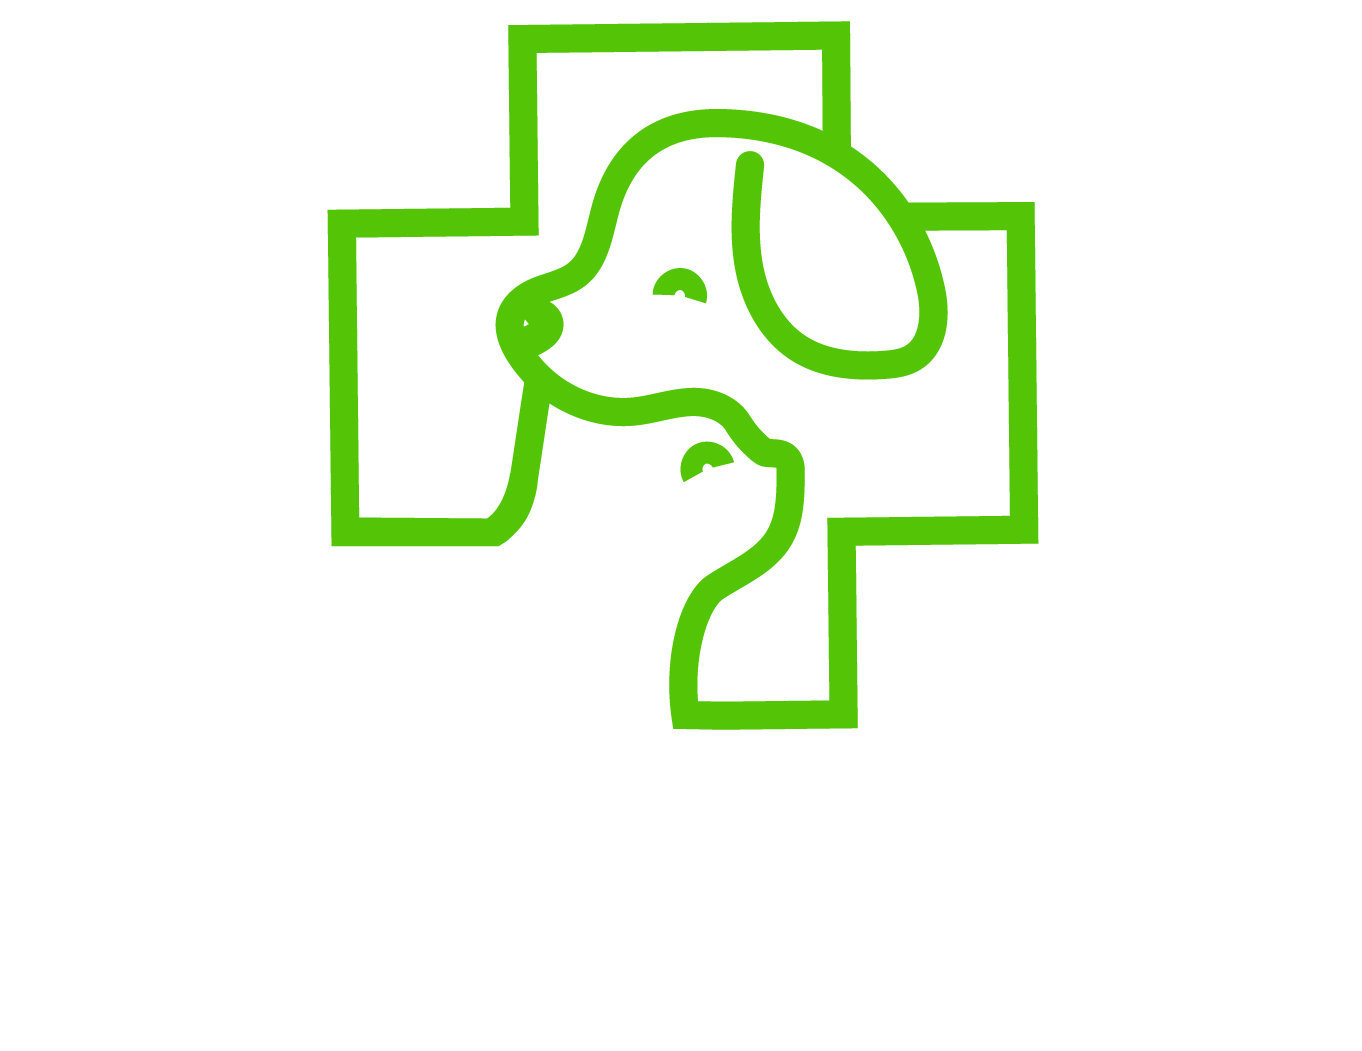 BetterPet